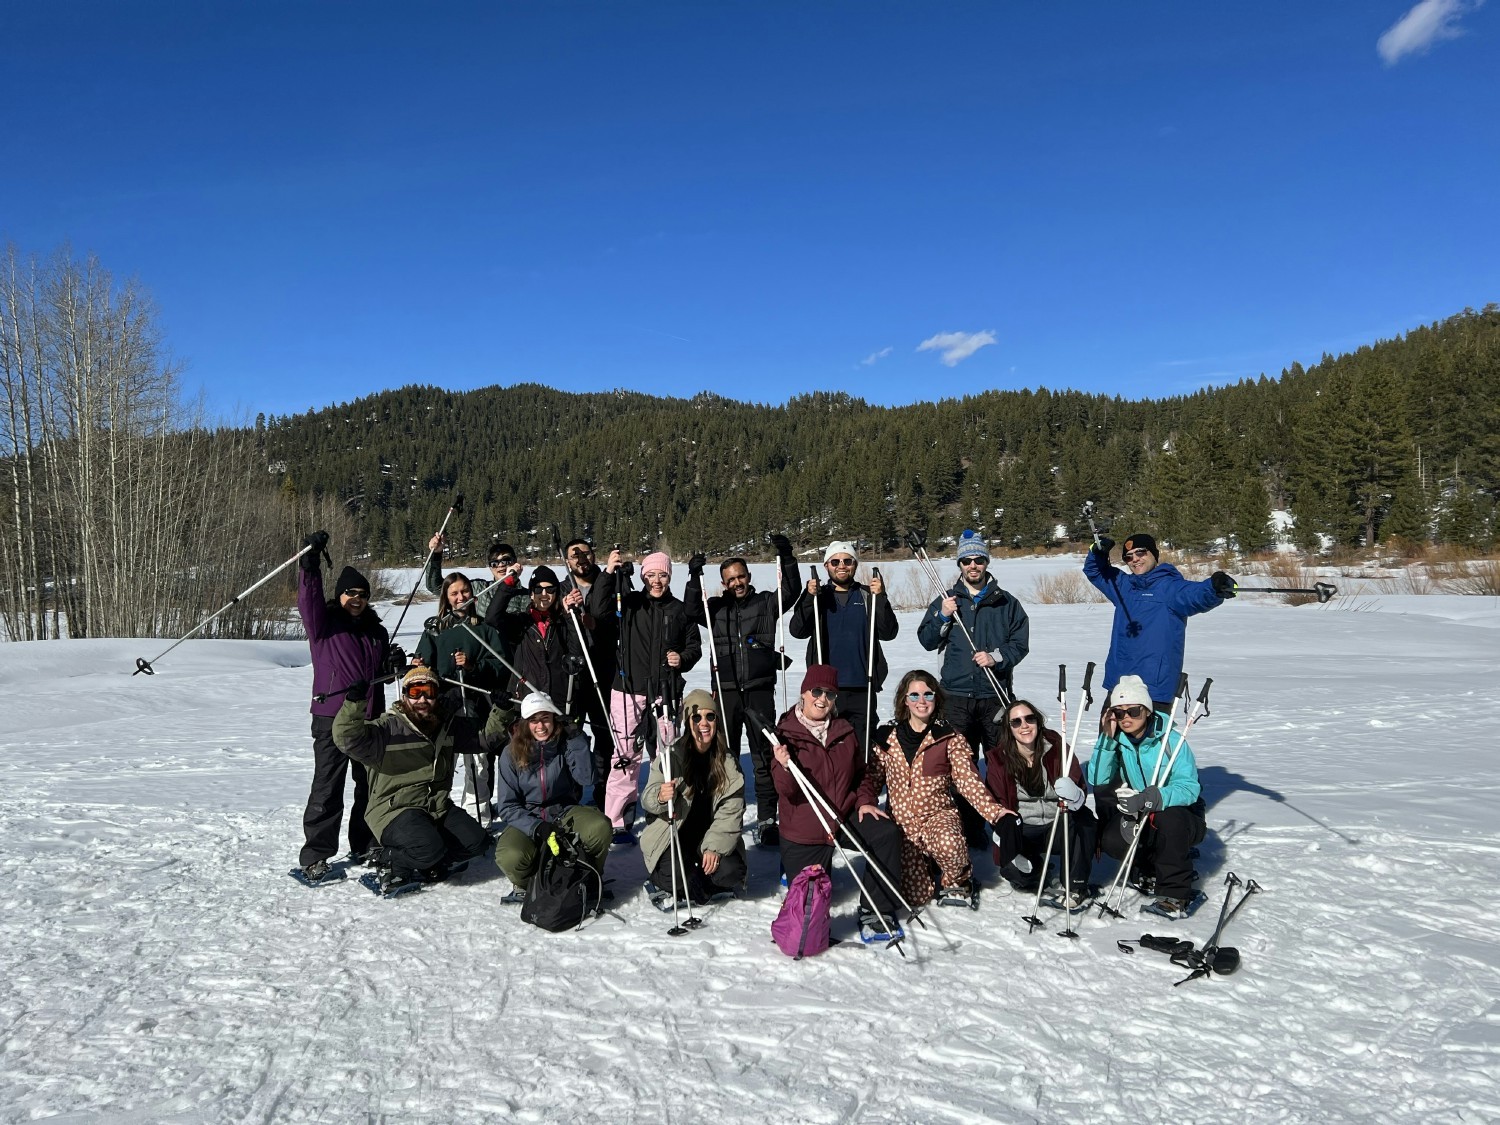 Quizlet team enjoying a ski activity on its first company retreat.